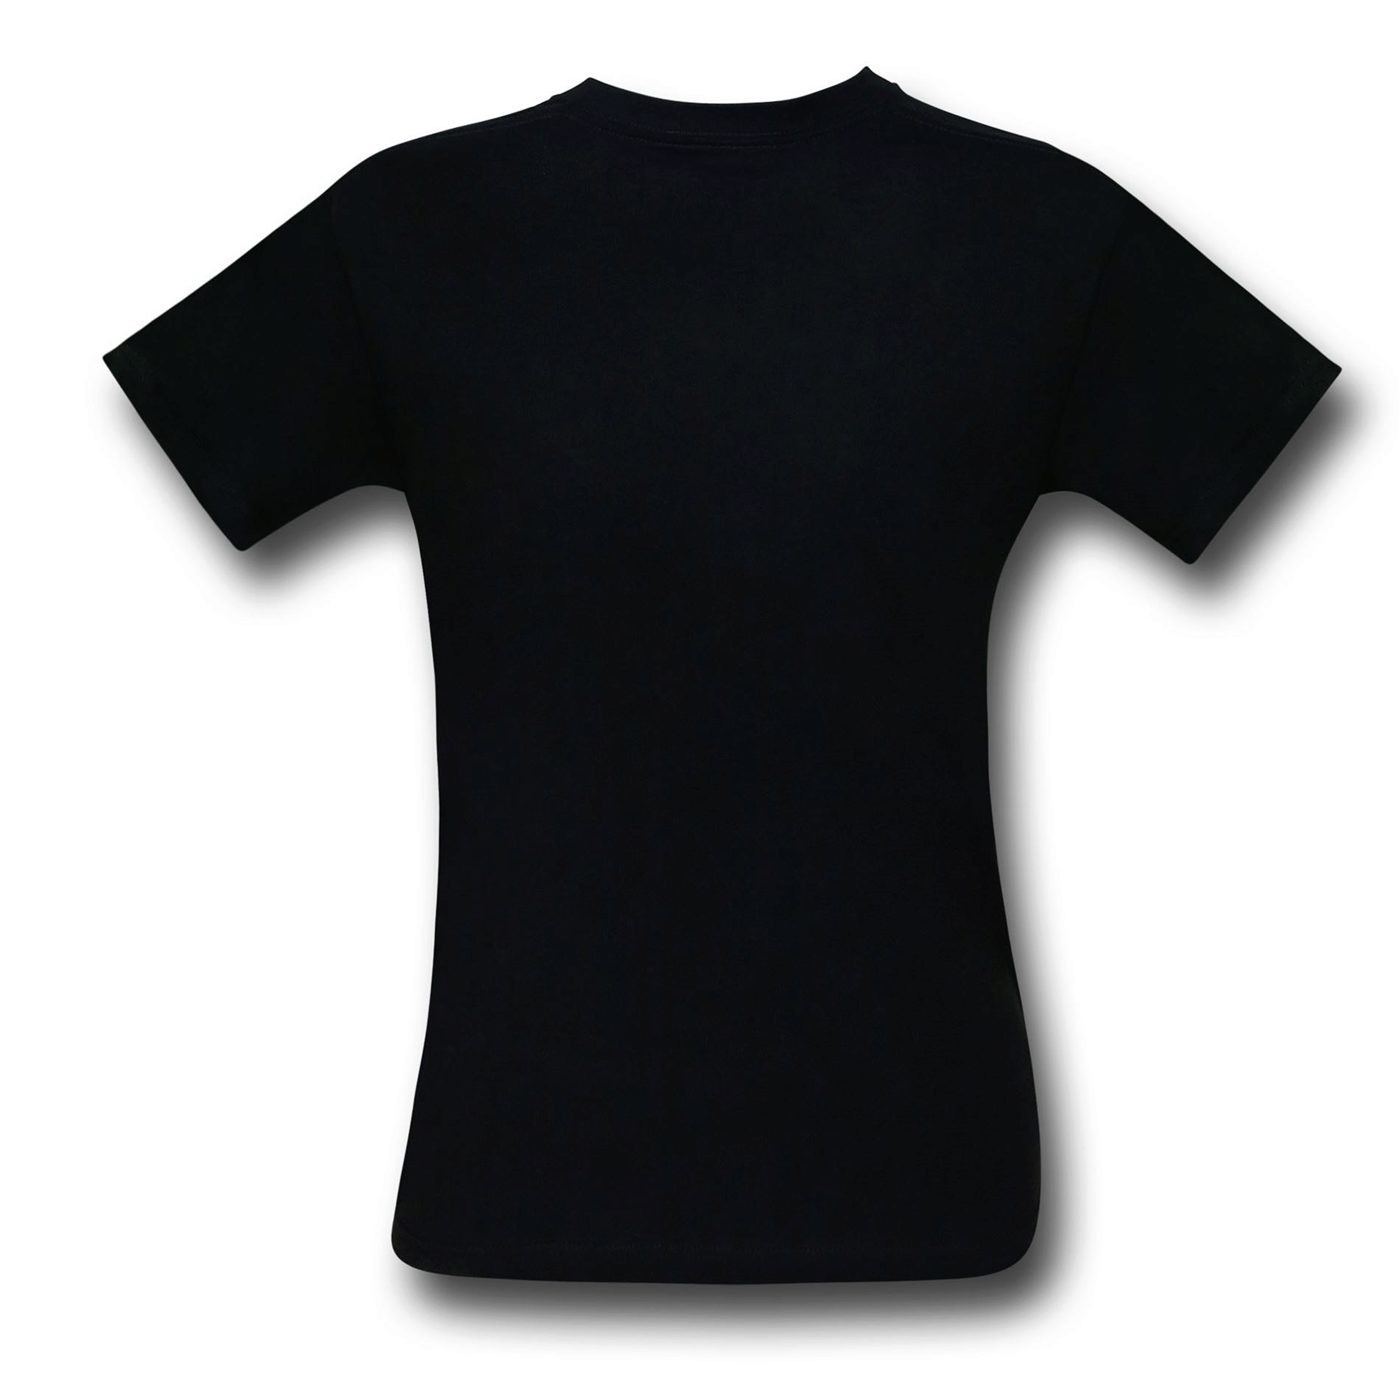 Black Panther Costume 30 Single T-Shirt